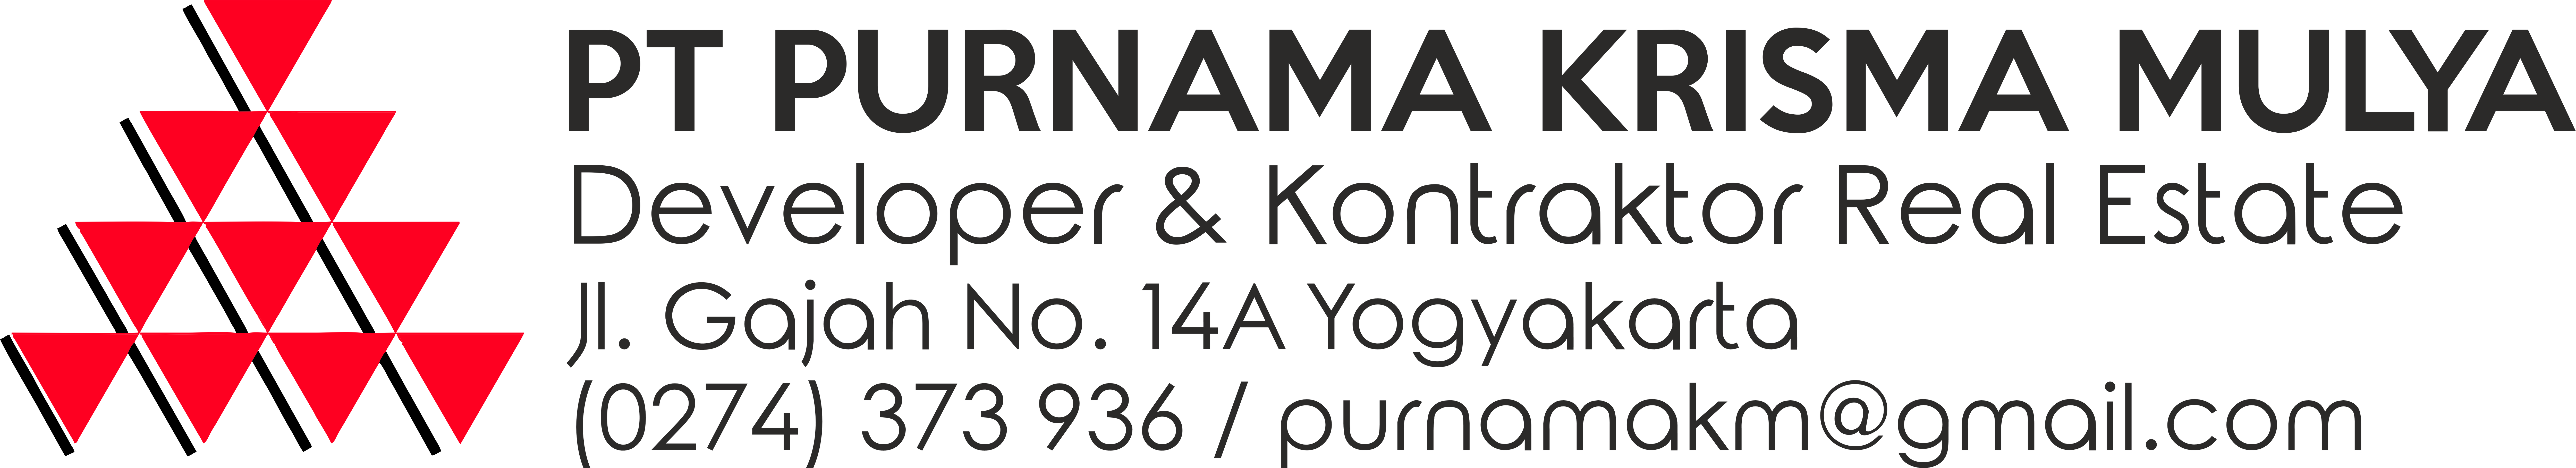 Logo PT PURNAMA KRISMA MULYA